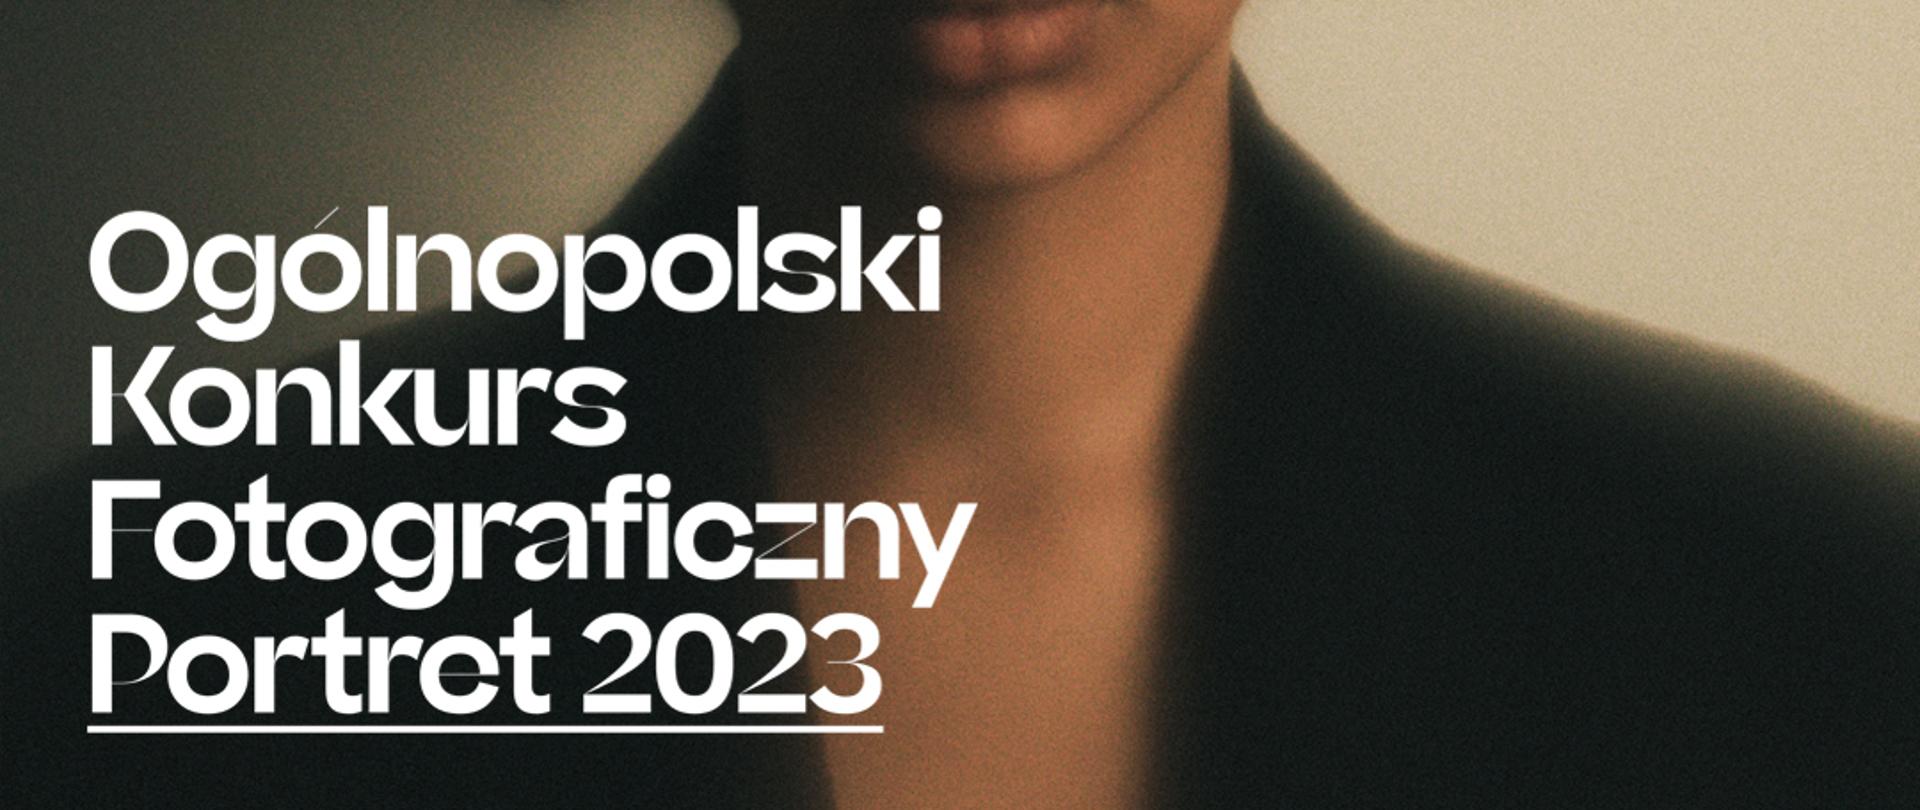 Plakat: Ogólnopolski Konkurs Fotograficzny Portret 2023